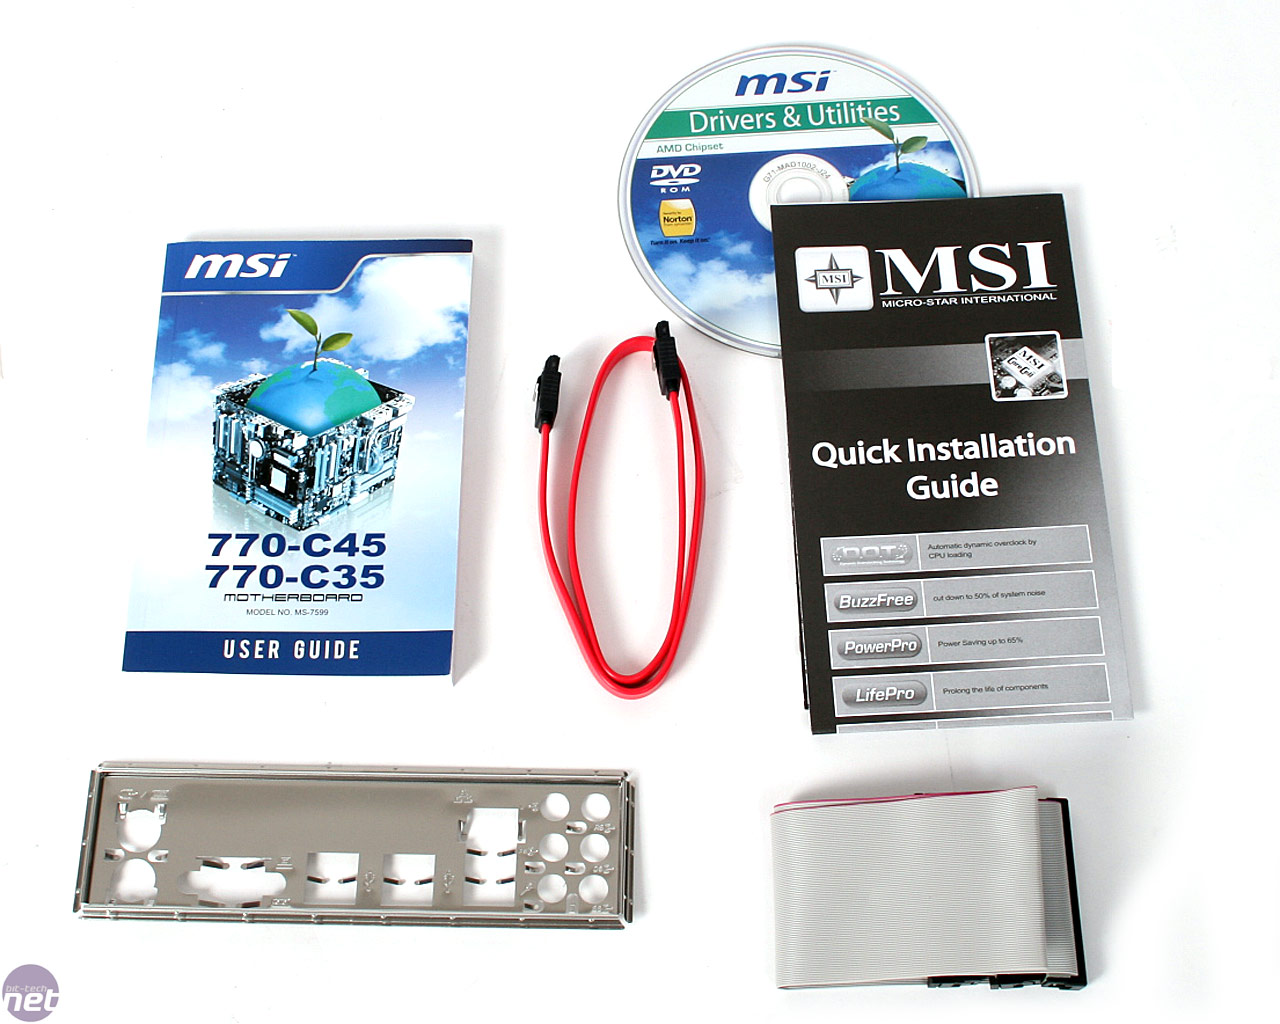 MSI 770-C45 Motherboard Review | bit-tech.net